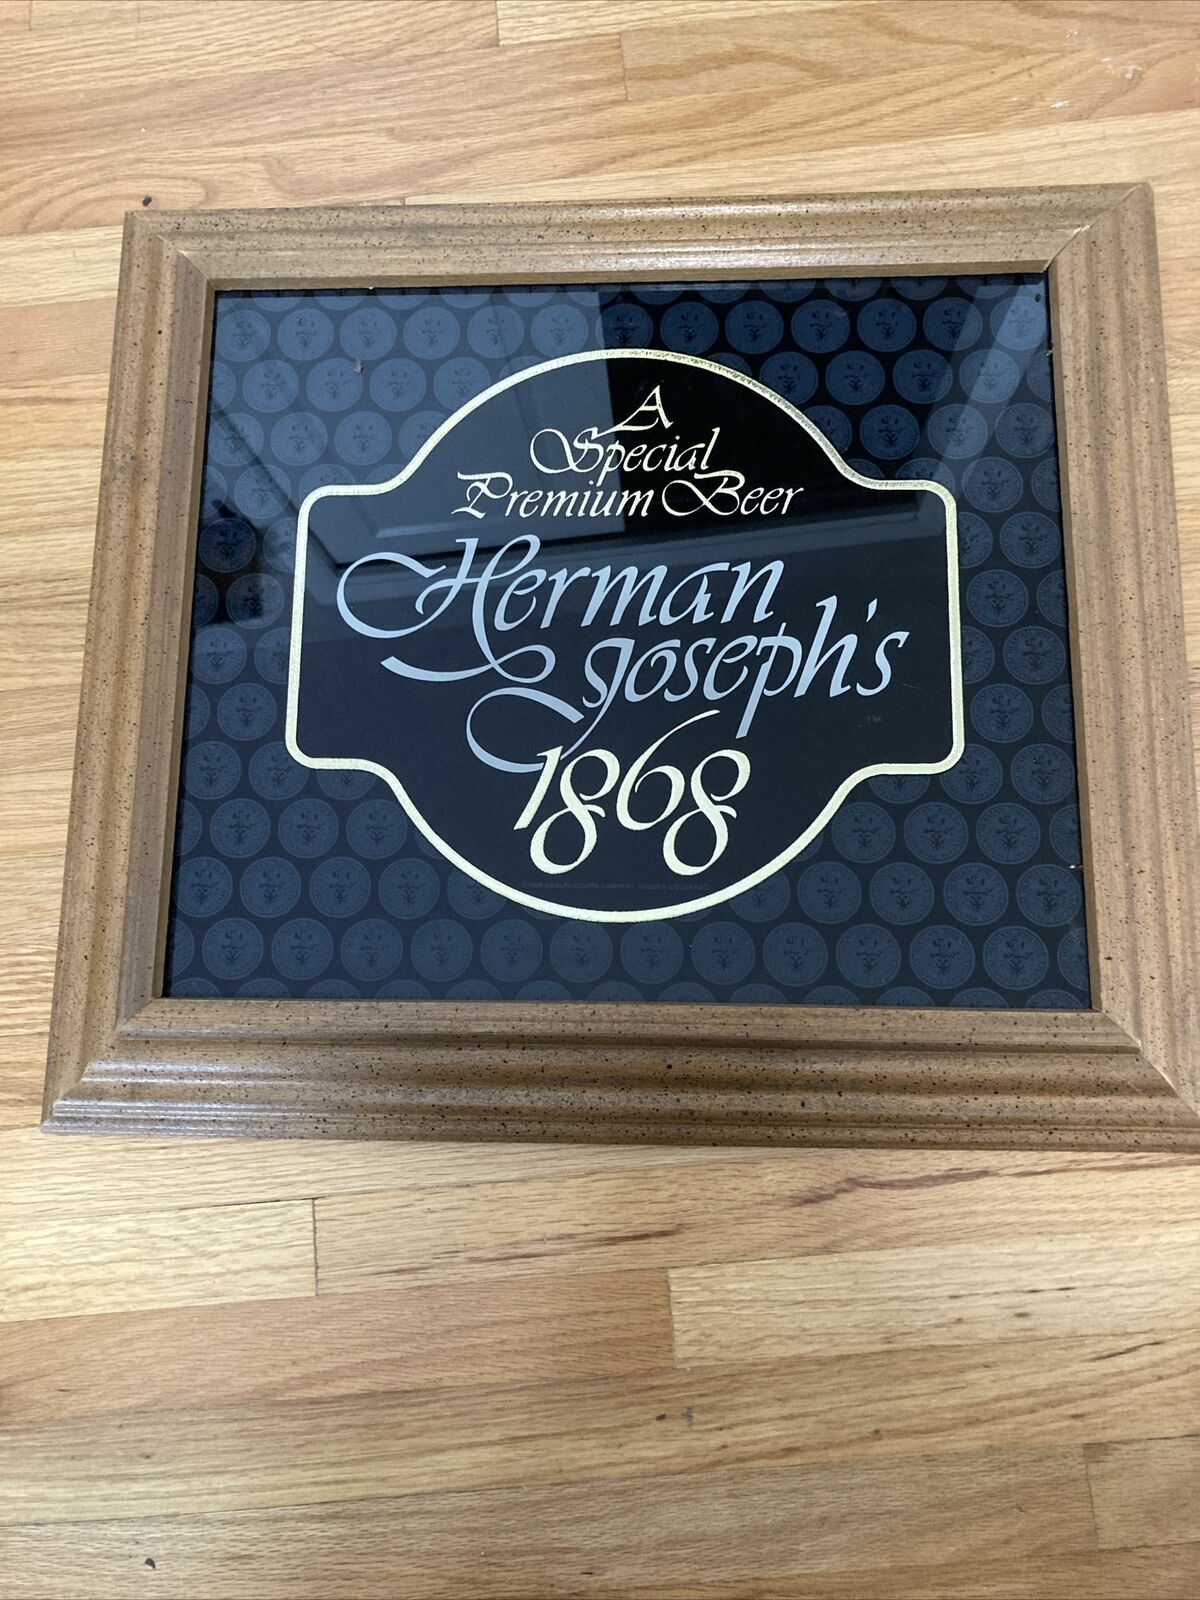 Herman Joseph’s 1868 - A Special Premium Beer Sign